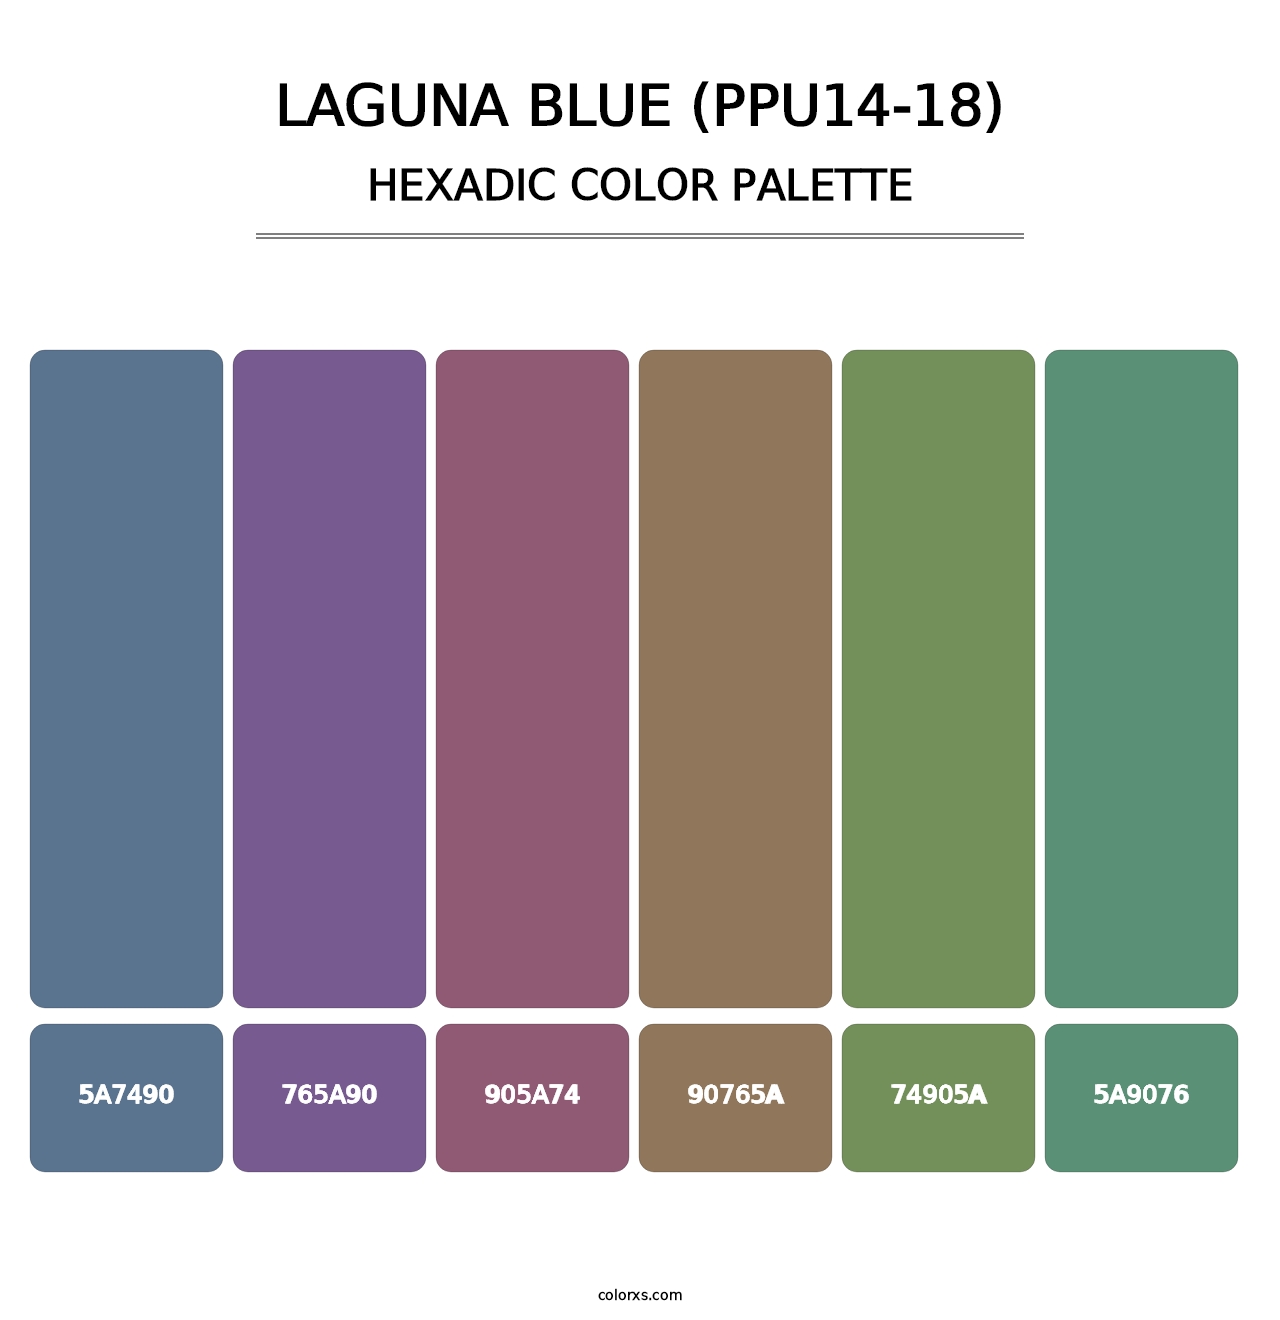 Laguna Blue (PPU14-18) - Hexadic Color Palette